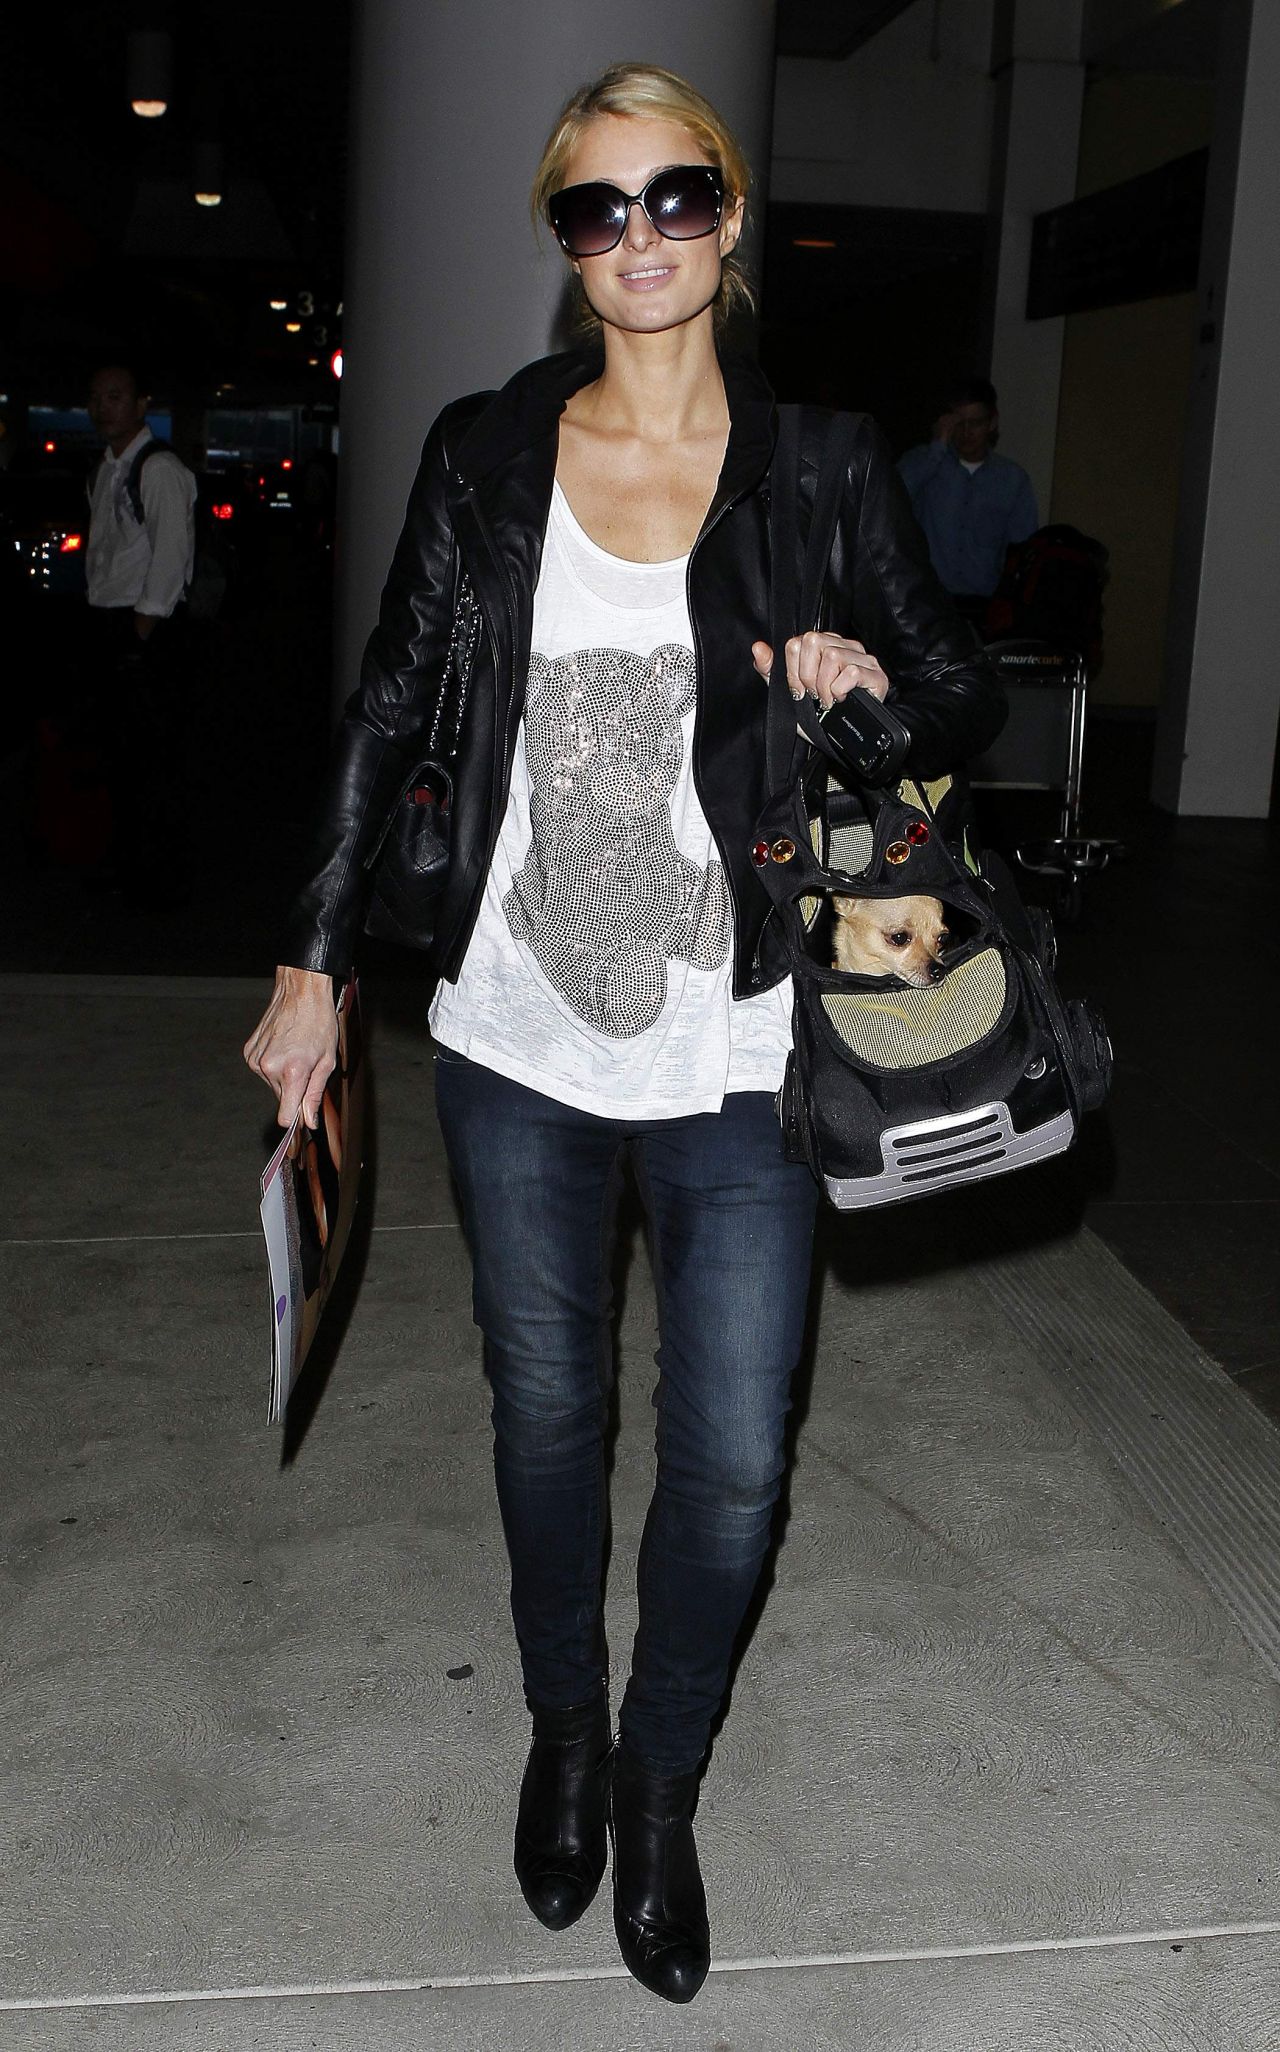 Paris Hilton at LAX Airport January 8, 2008 – Star Style